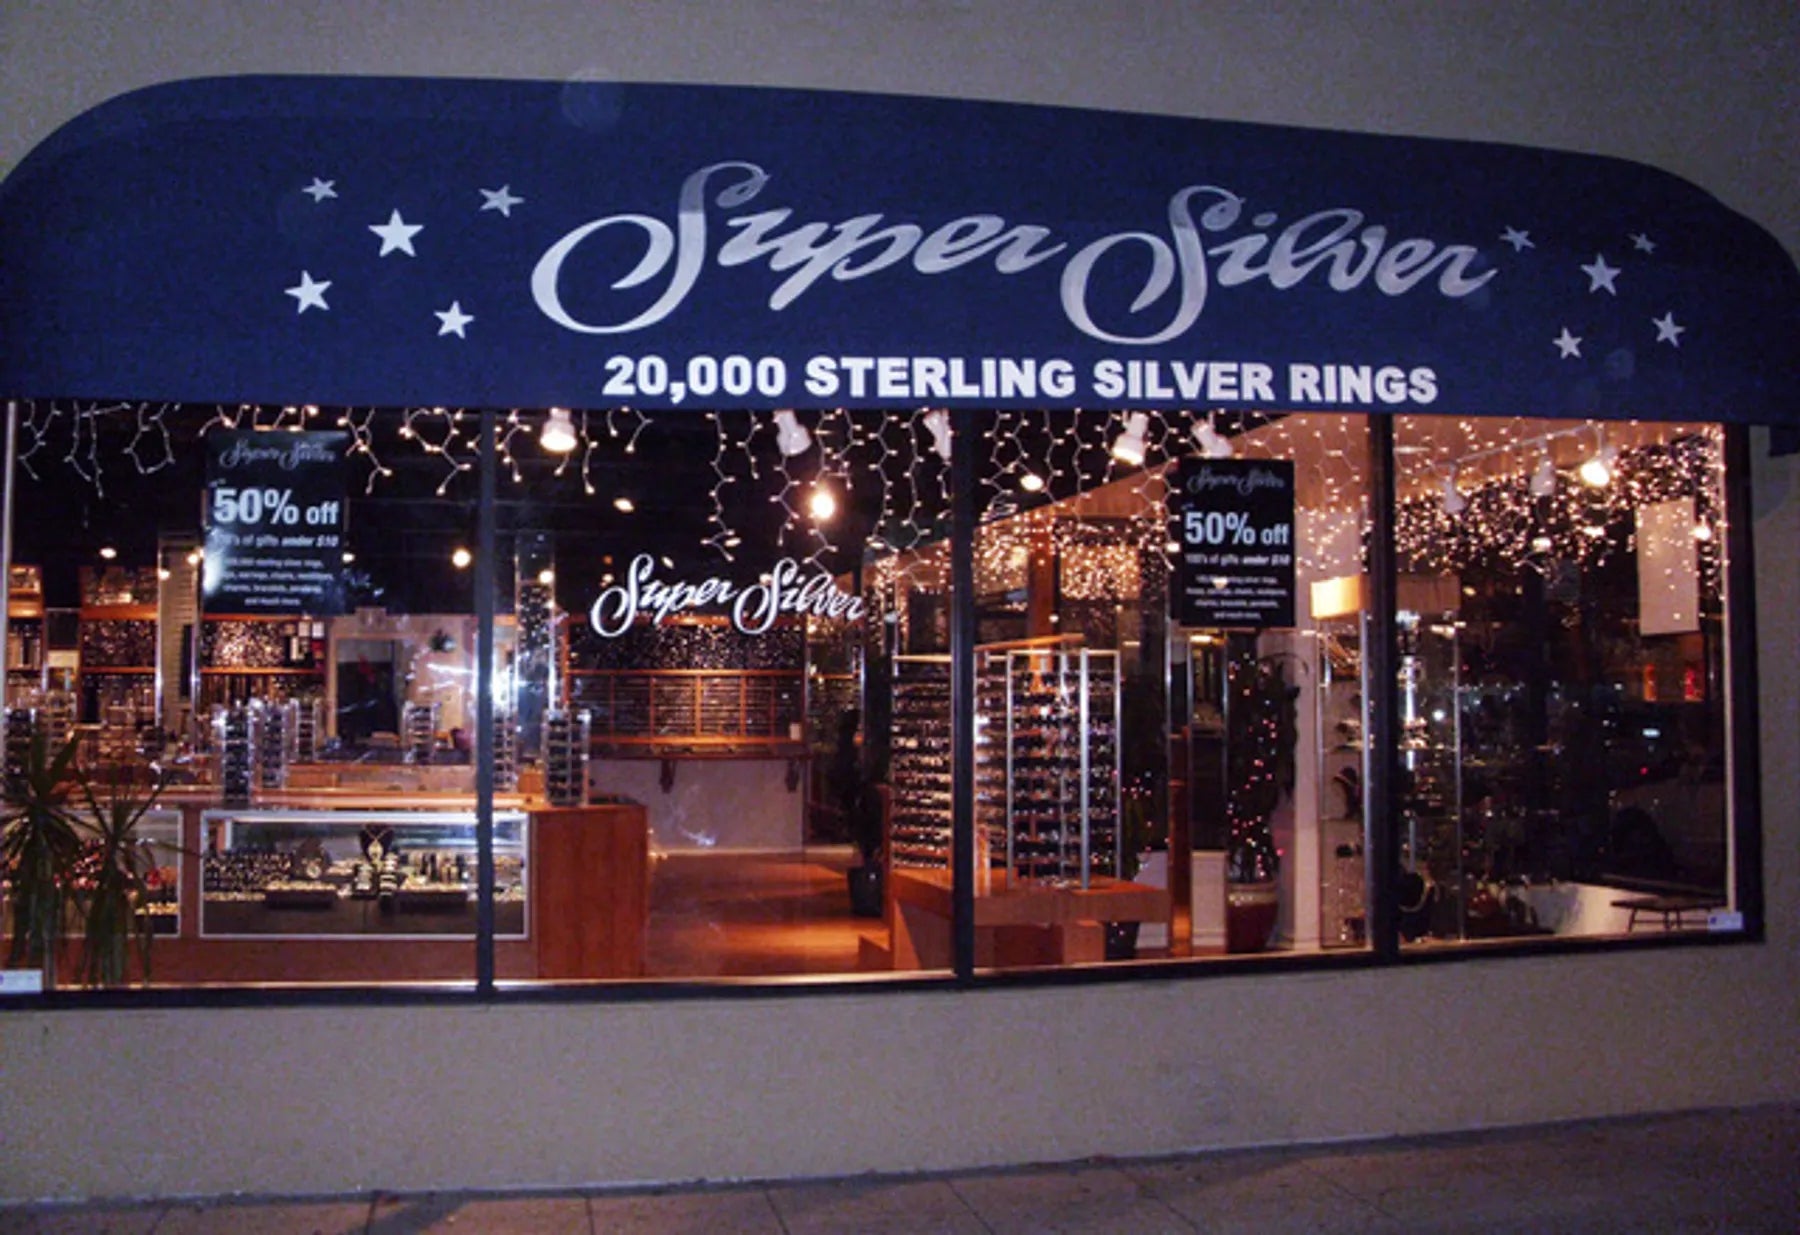 Super Silver Santa Cruz